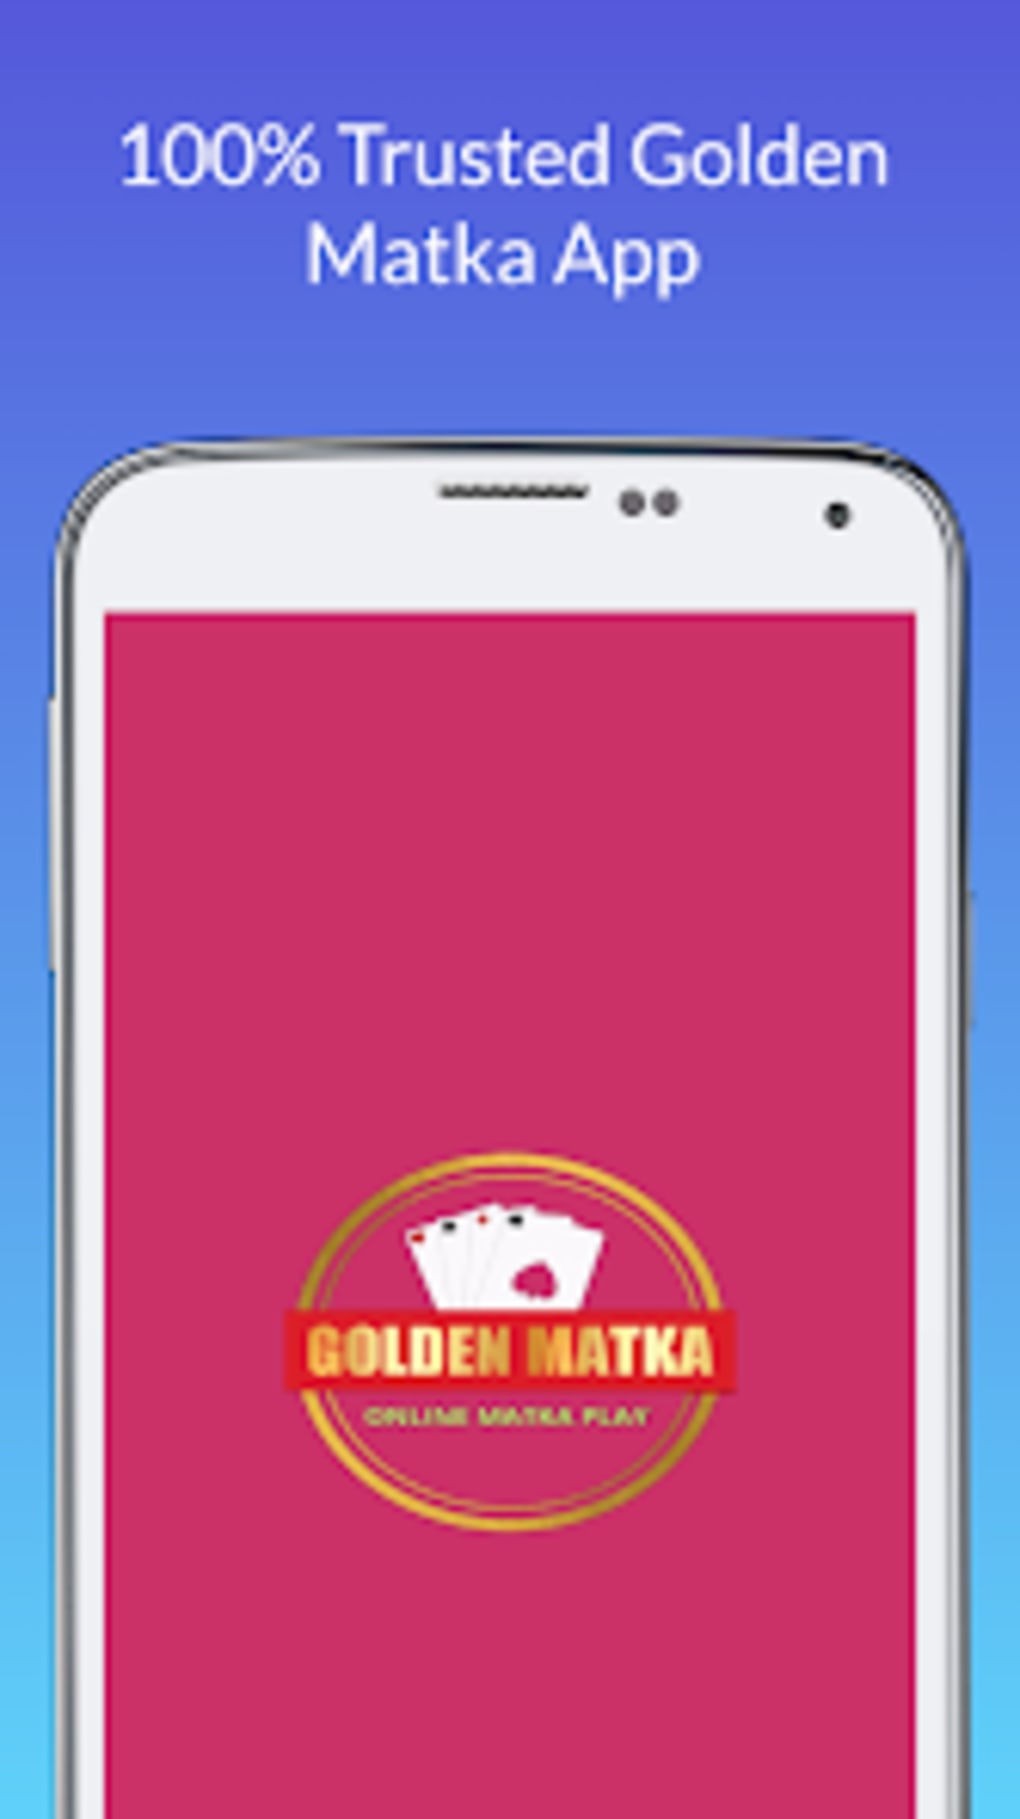 Golden Matka play app